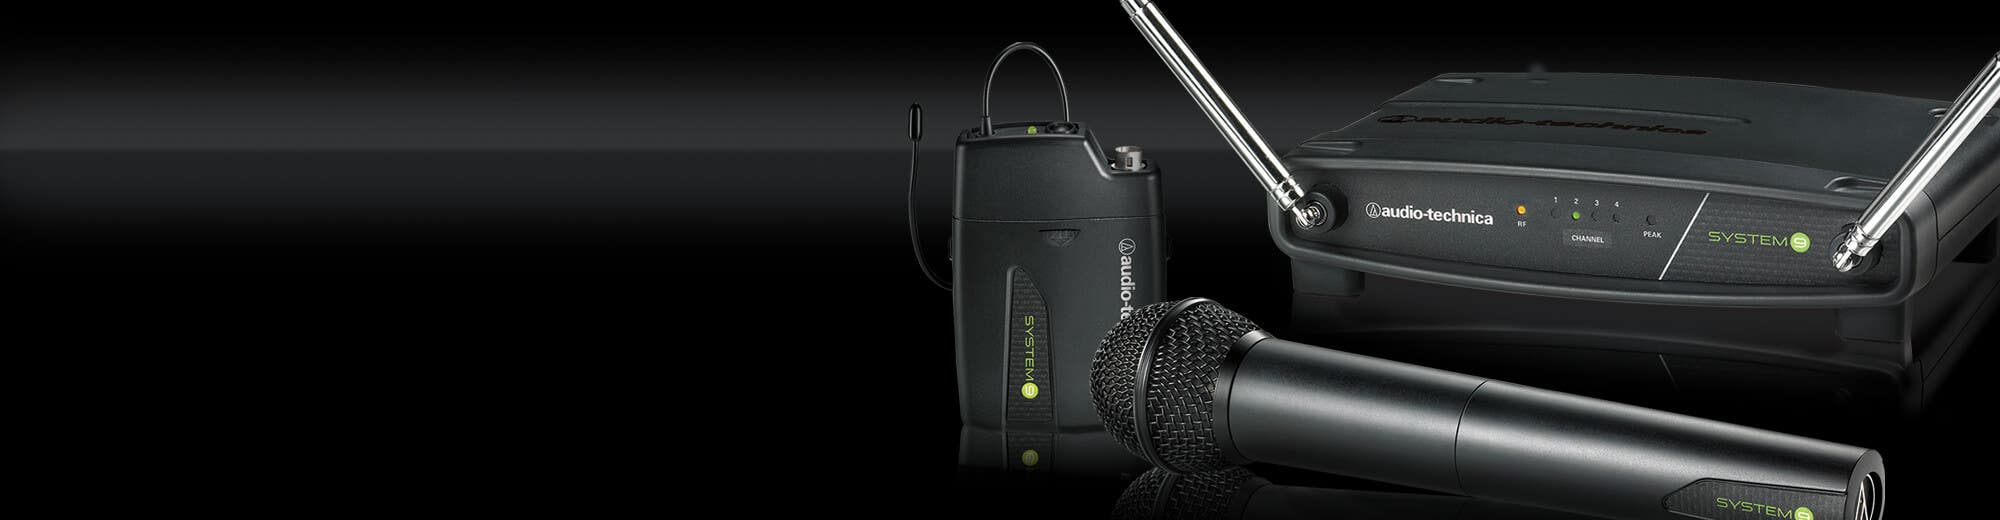 Audio-Technica ATW-2129c Wireless Lavalier Microphone System